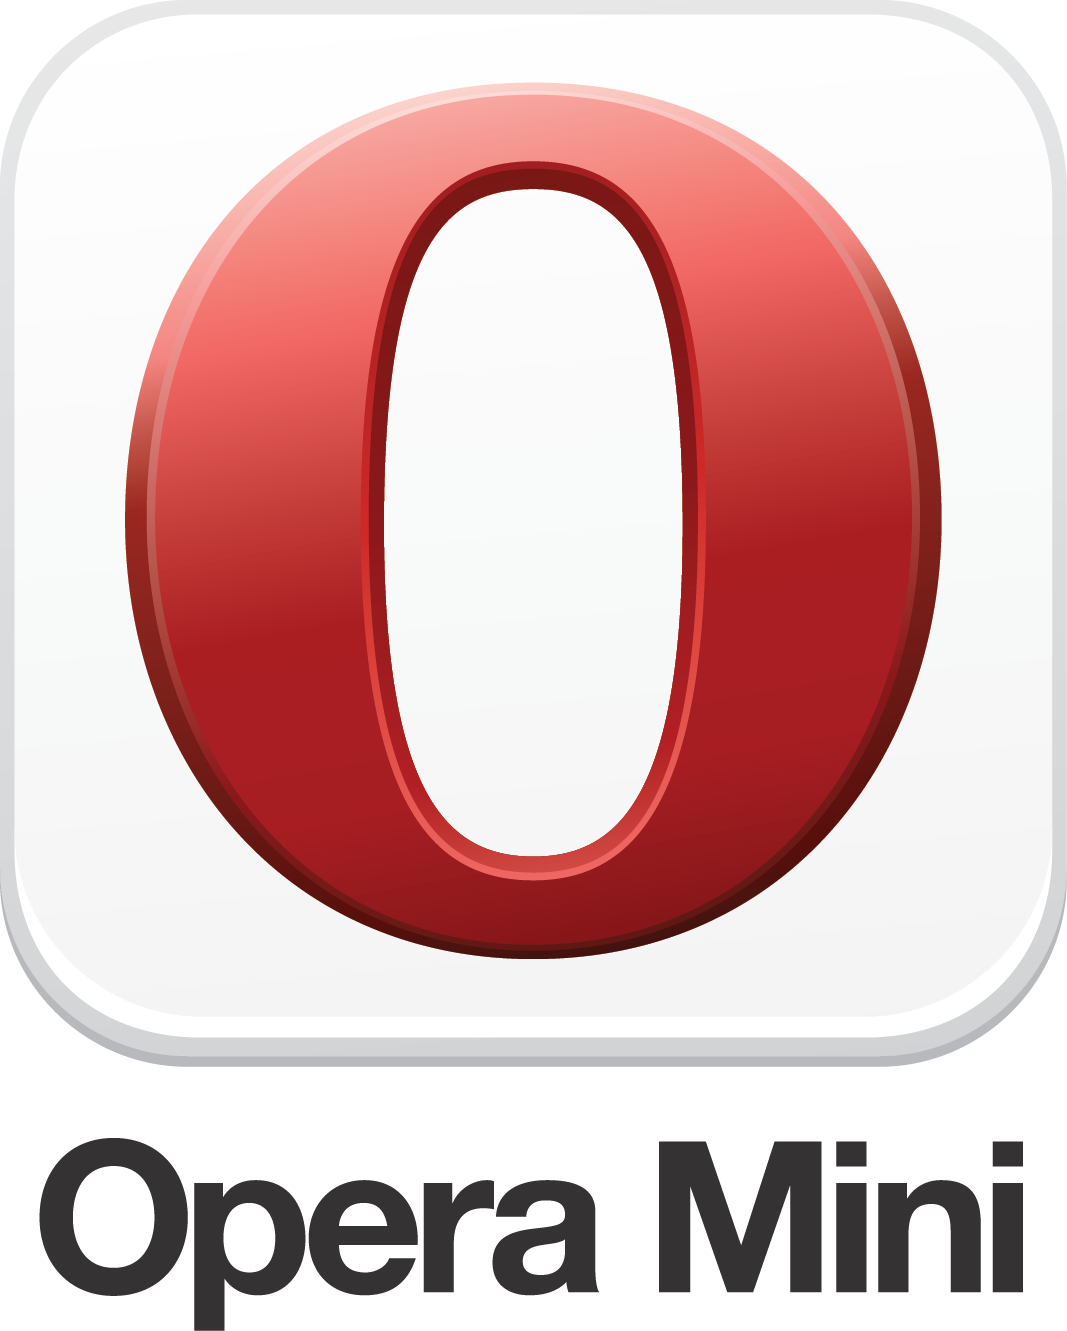 Opera Mini Download Apk For Bb10 - Download Opera Mini ...